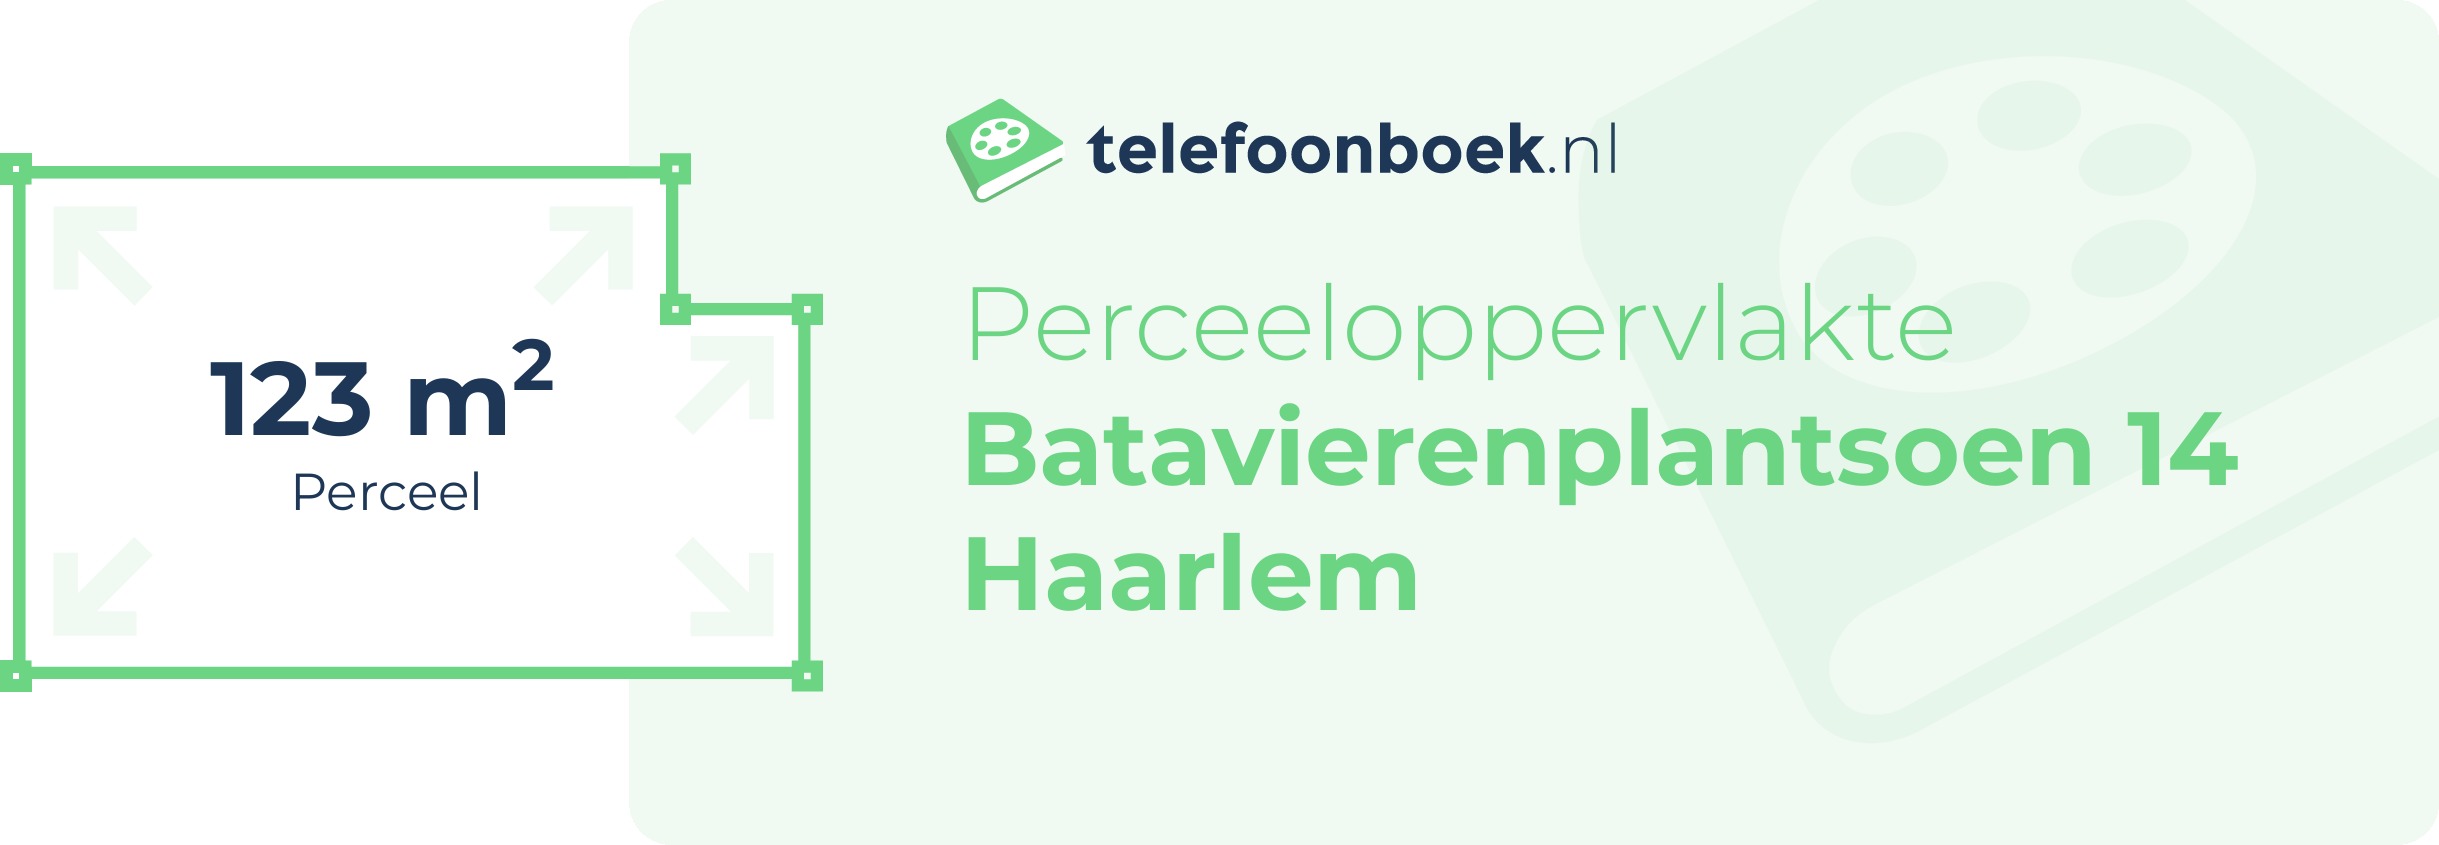 Perceeloppervlakte Batavierenplantsoen 14 Haarlem